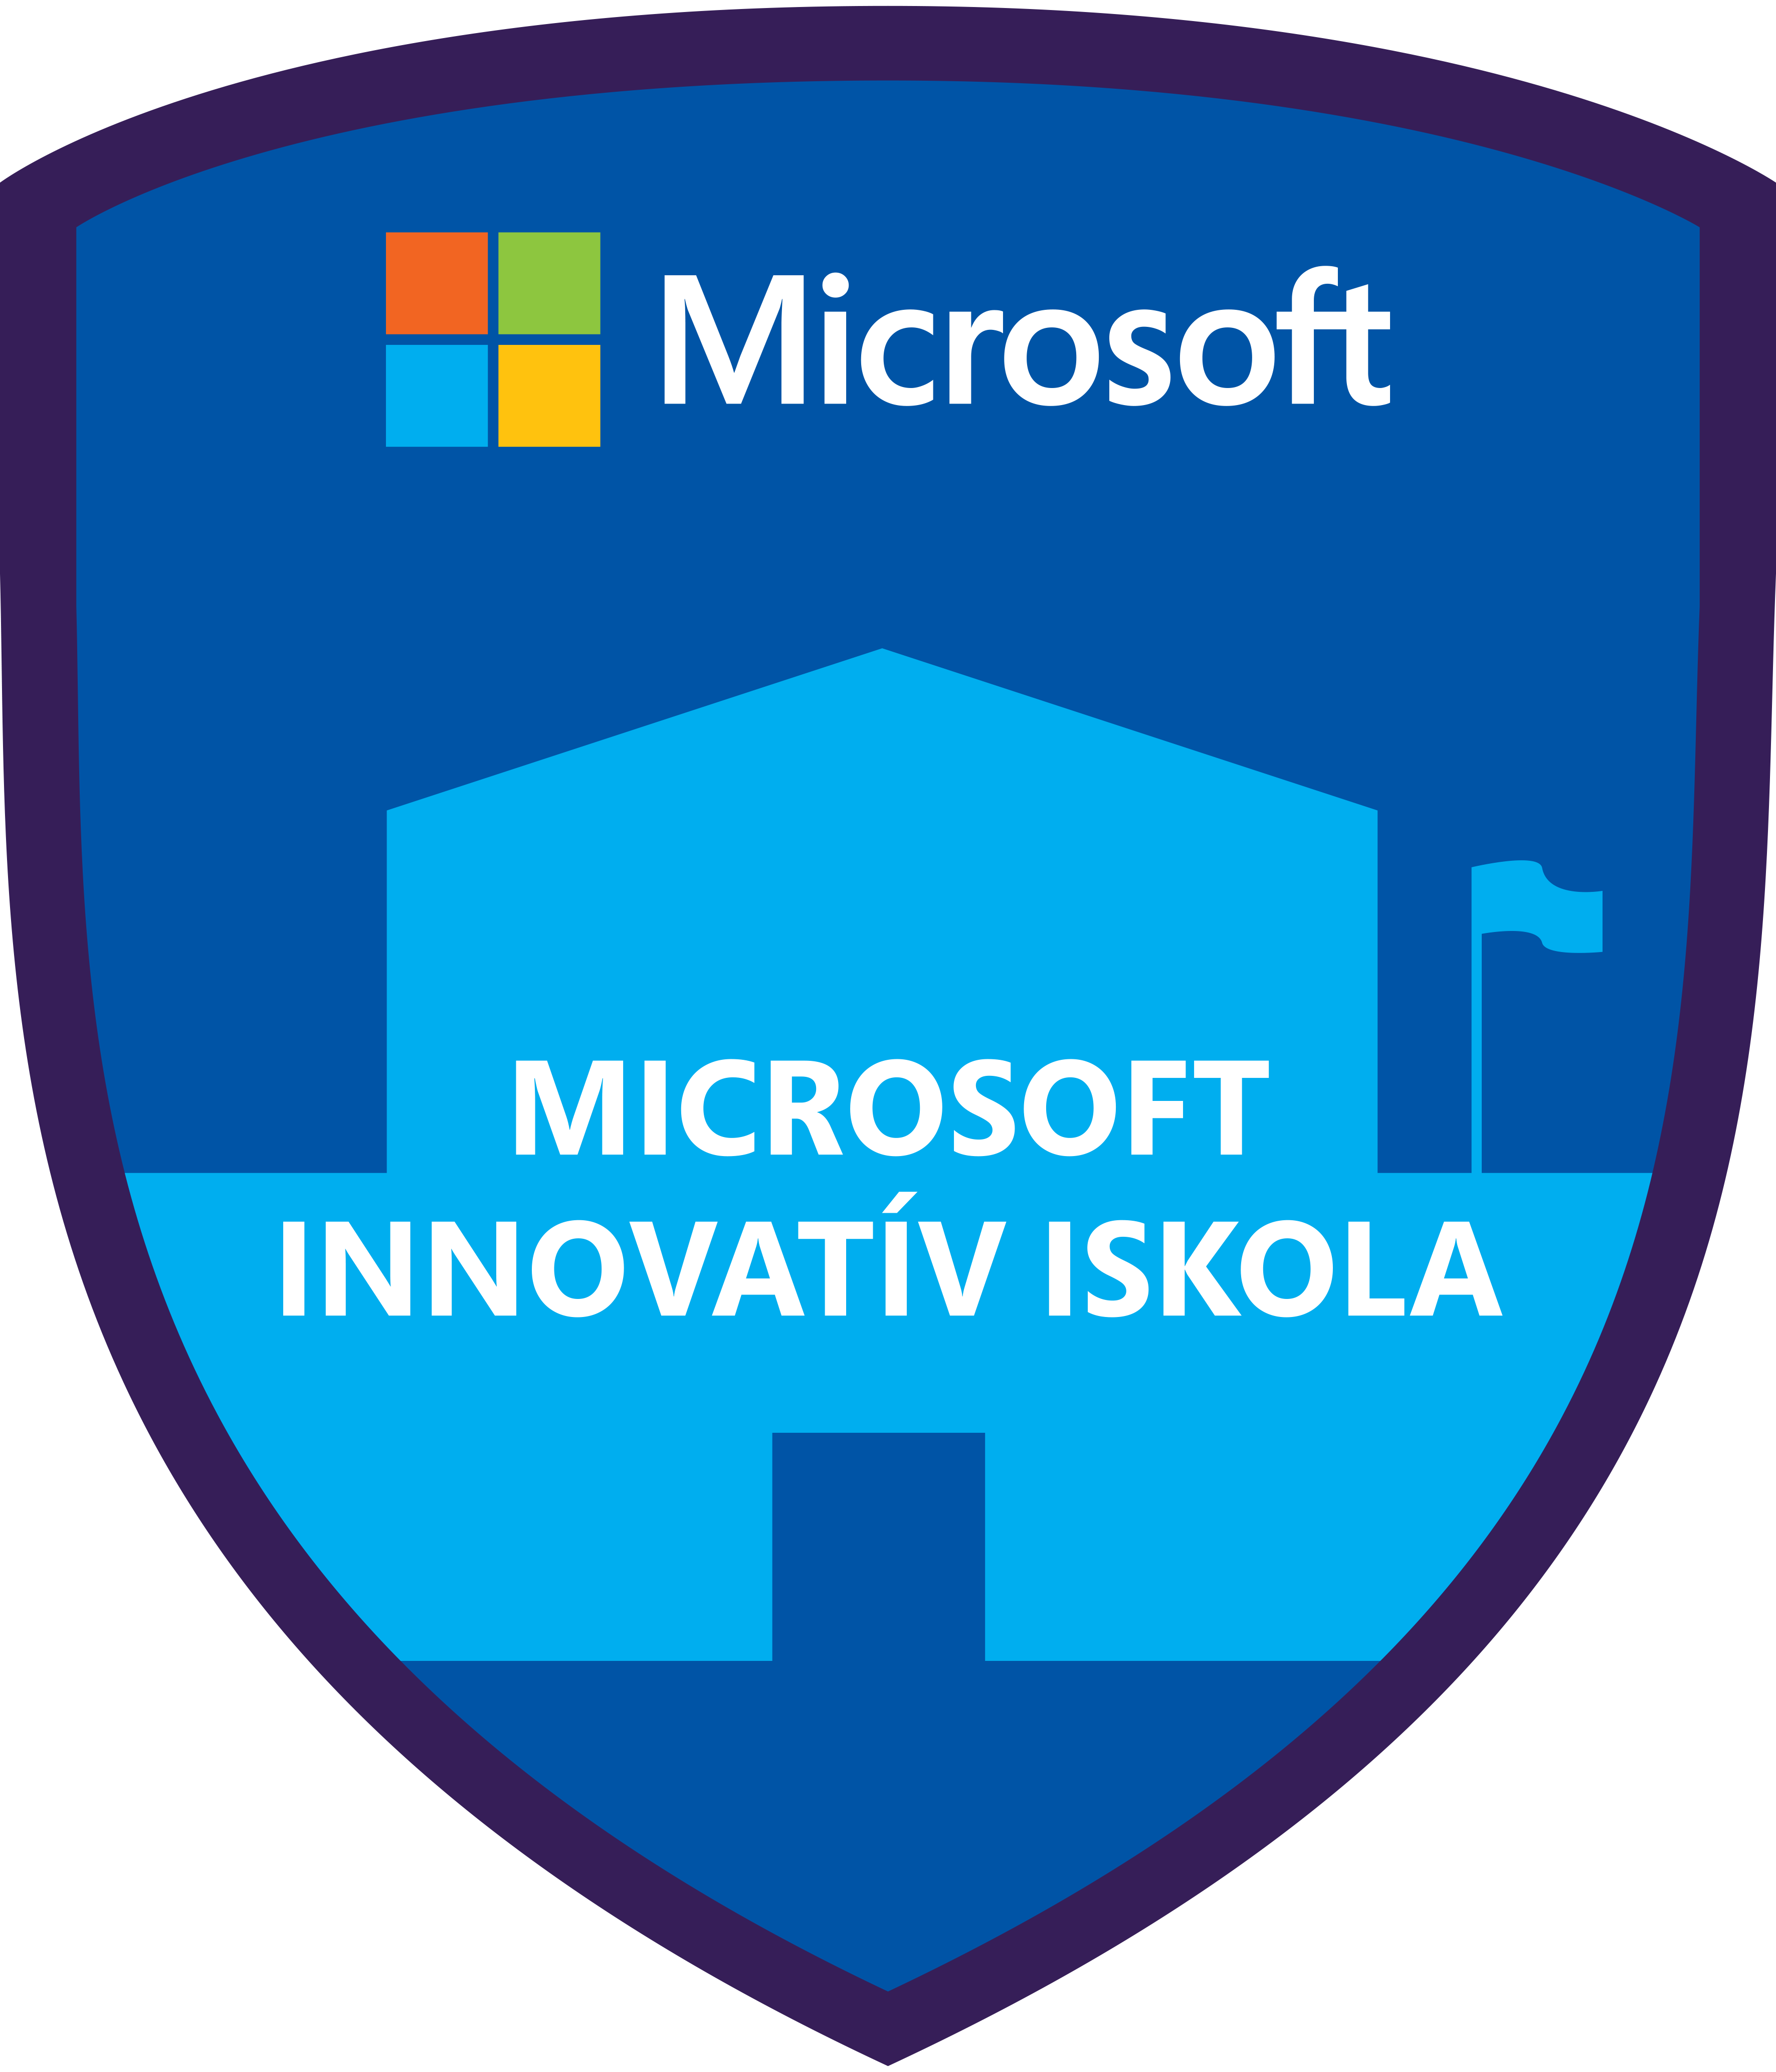 Microsoft Innovatív Iskola lettünk